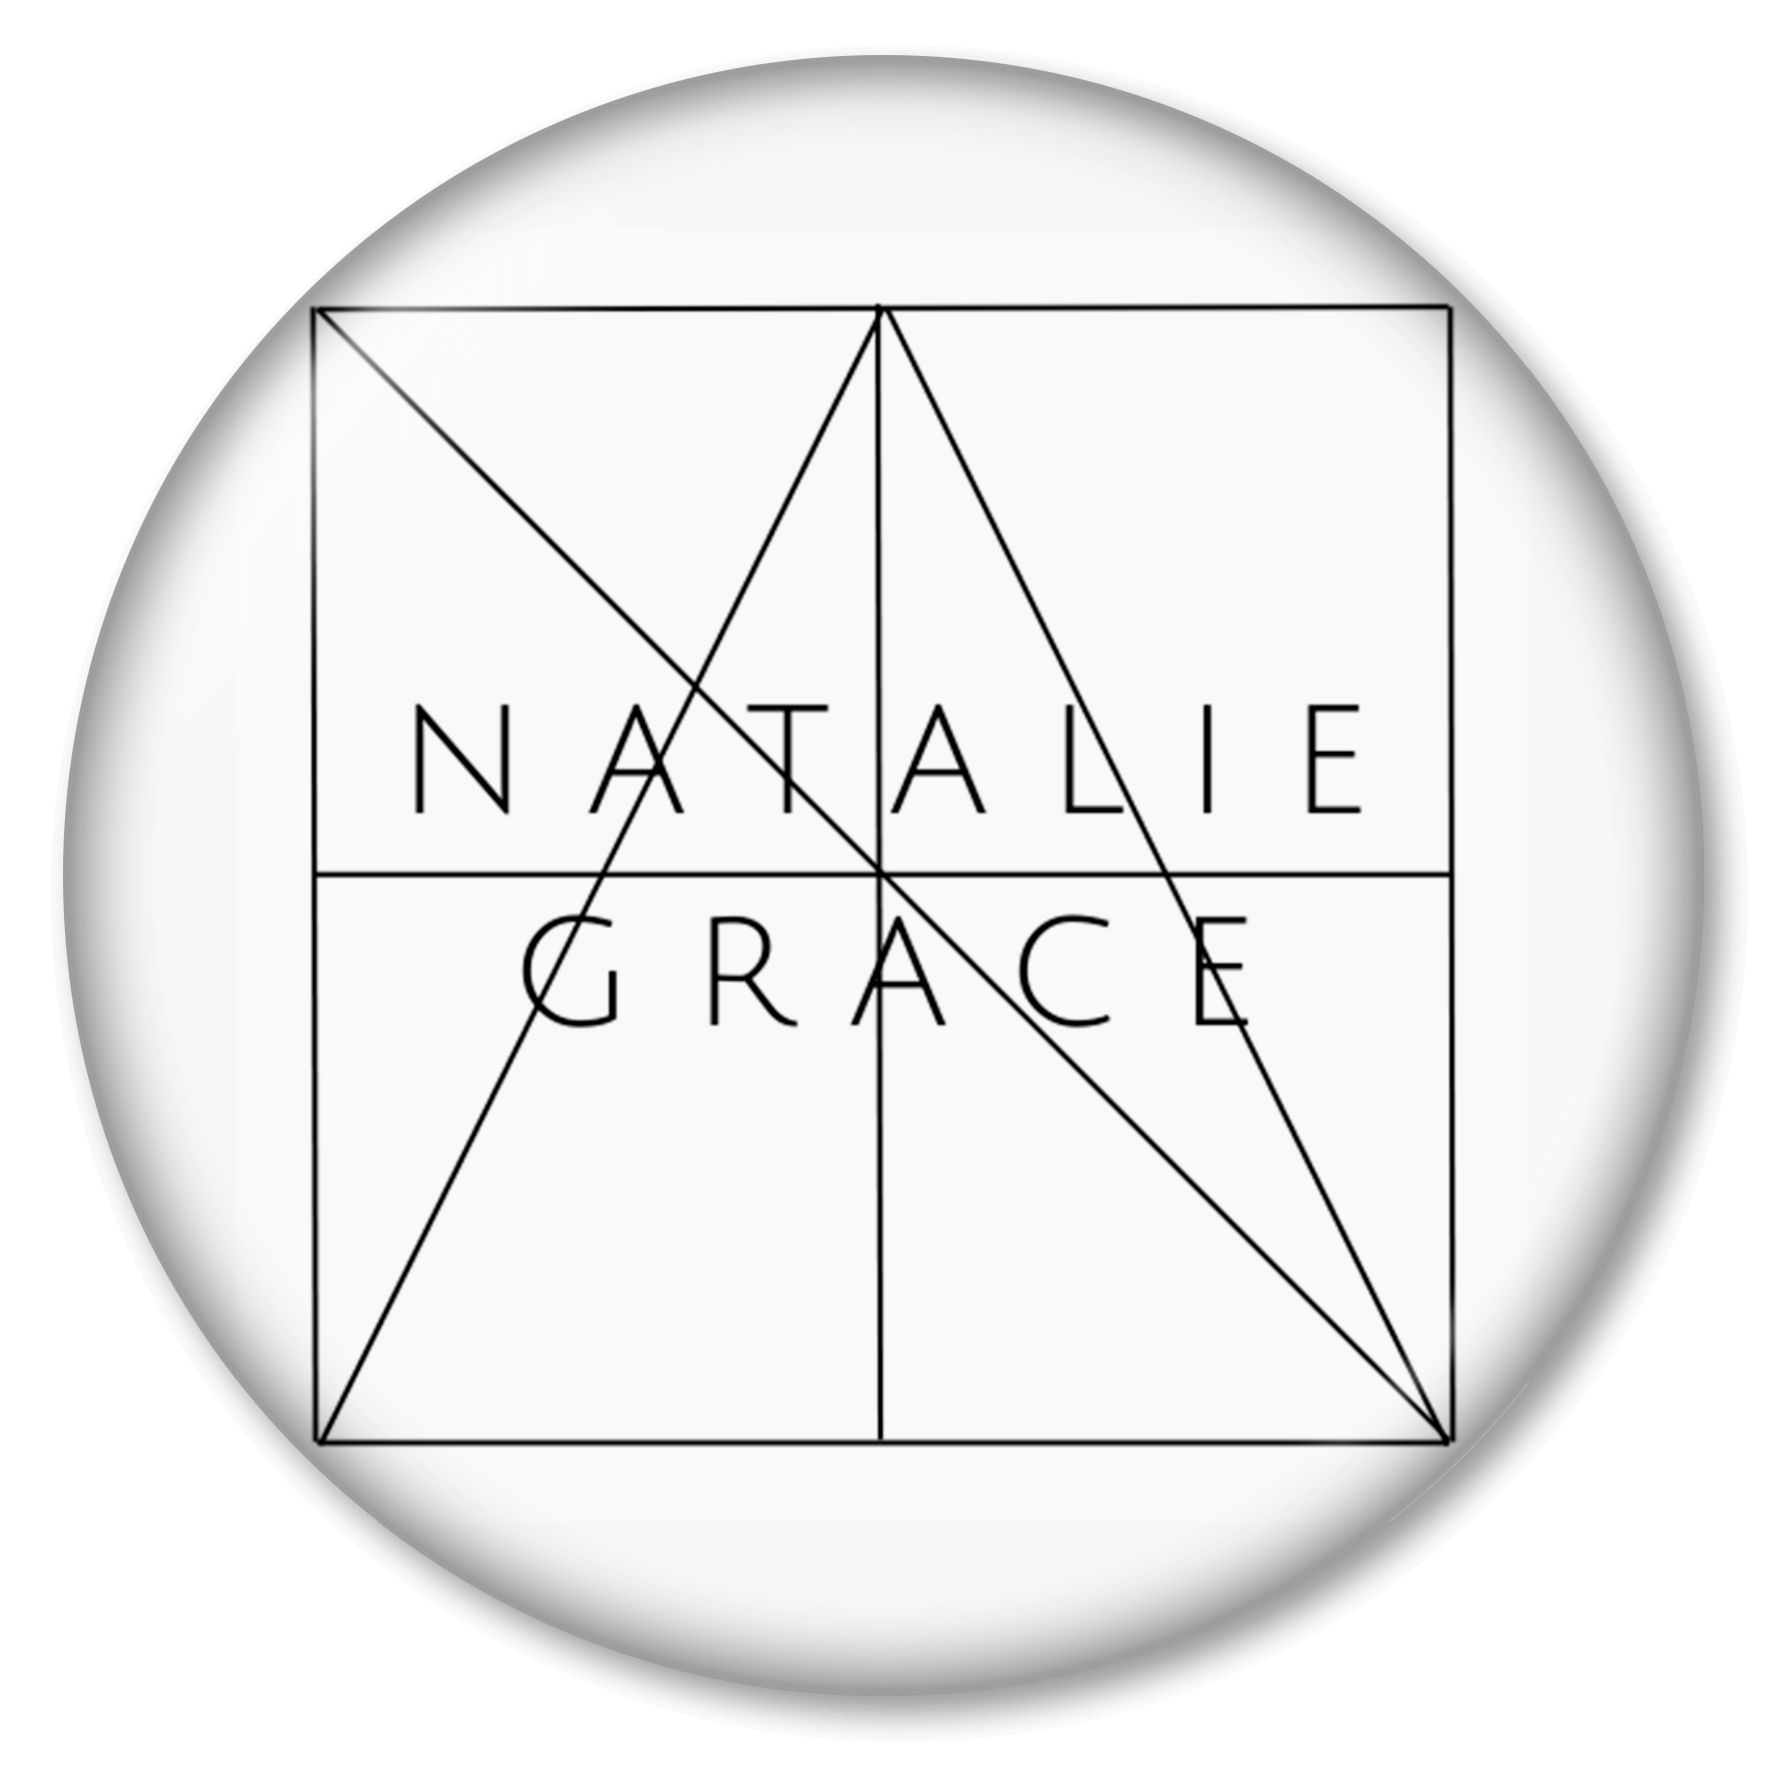 Natalie Grace badge